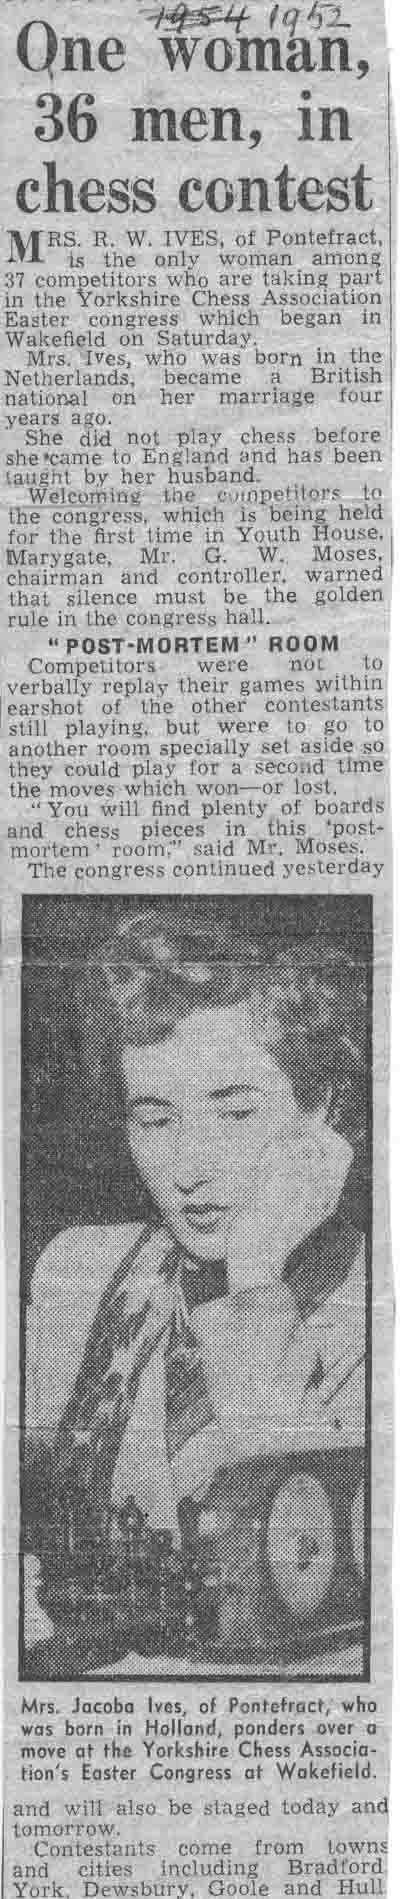 1952 April - Jacoba Ives